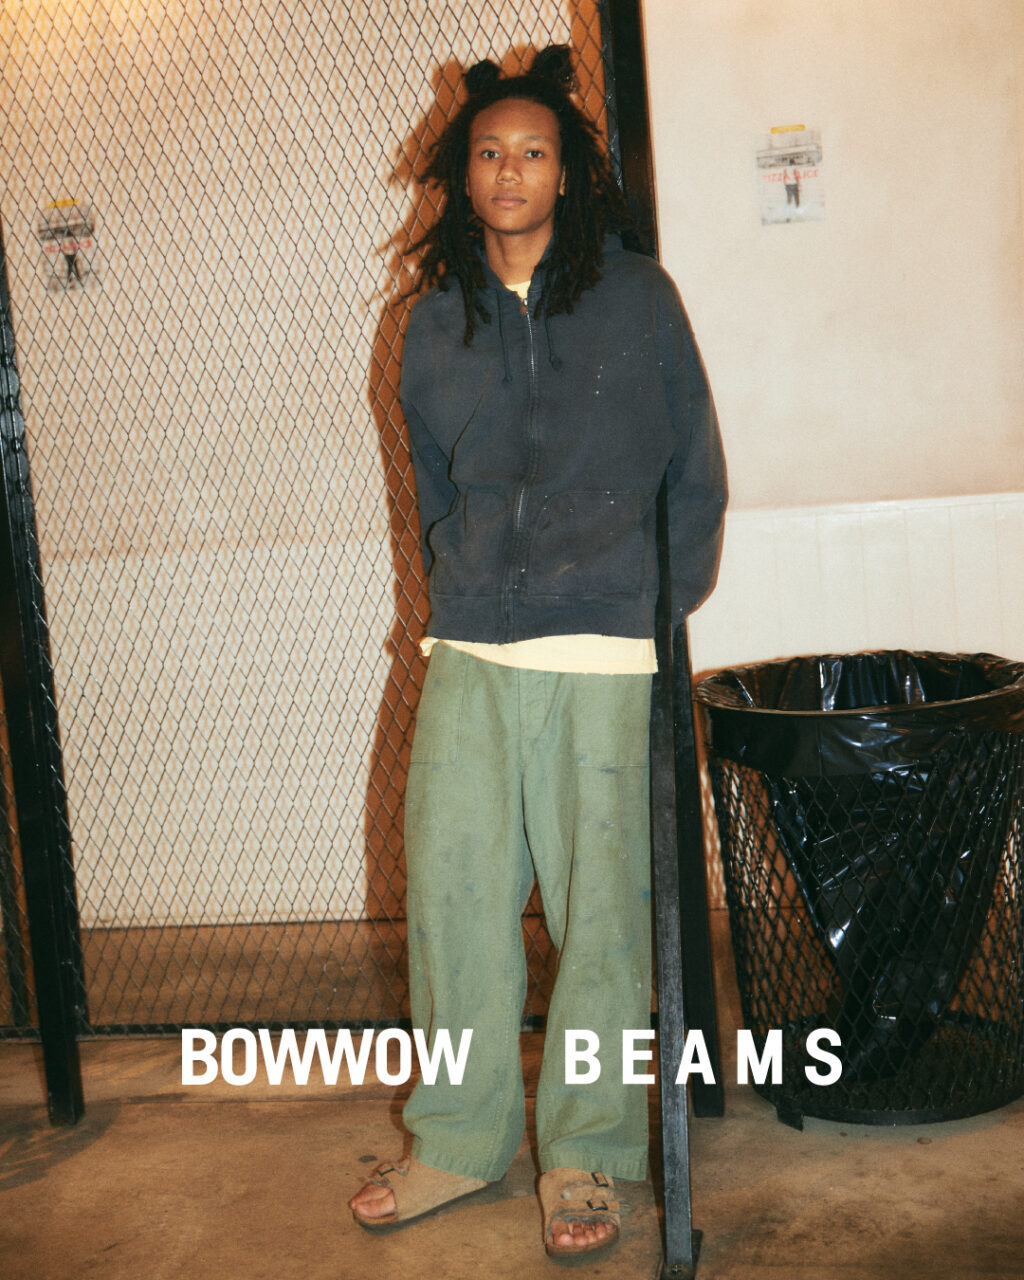 BOW WOW x BEAMS ジップパーカー/ベイカーパンツ 9月23日/9月26日発売予定